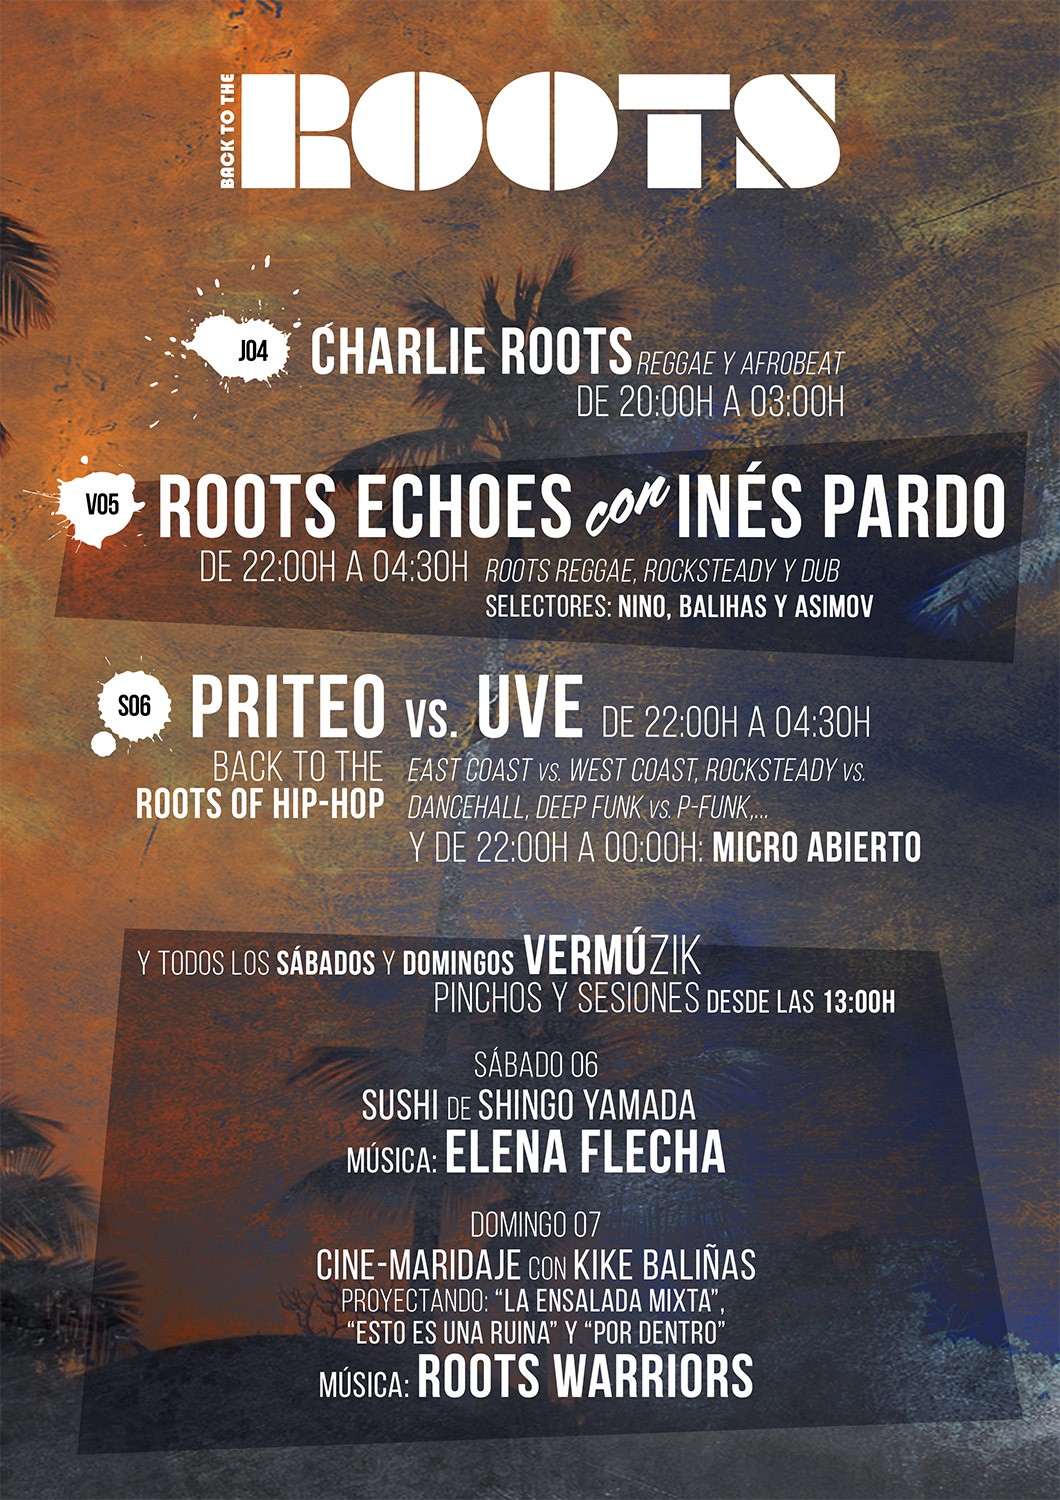 Roots Echoes con Inés Pardo y Back To The Roots Of Hip-Hop con Priteo vs. UVE